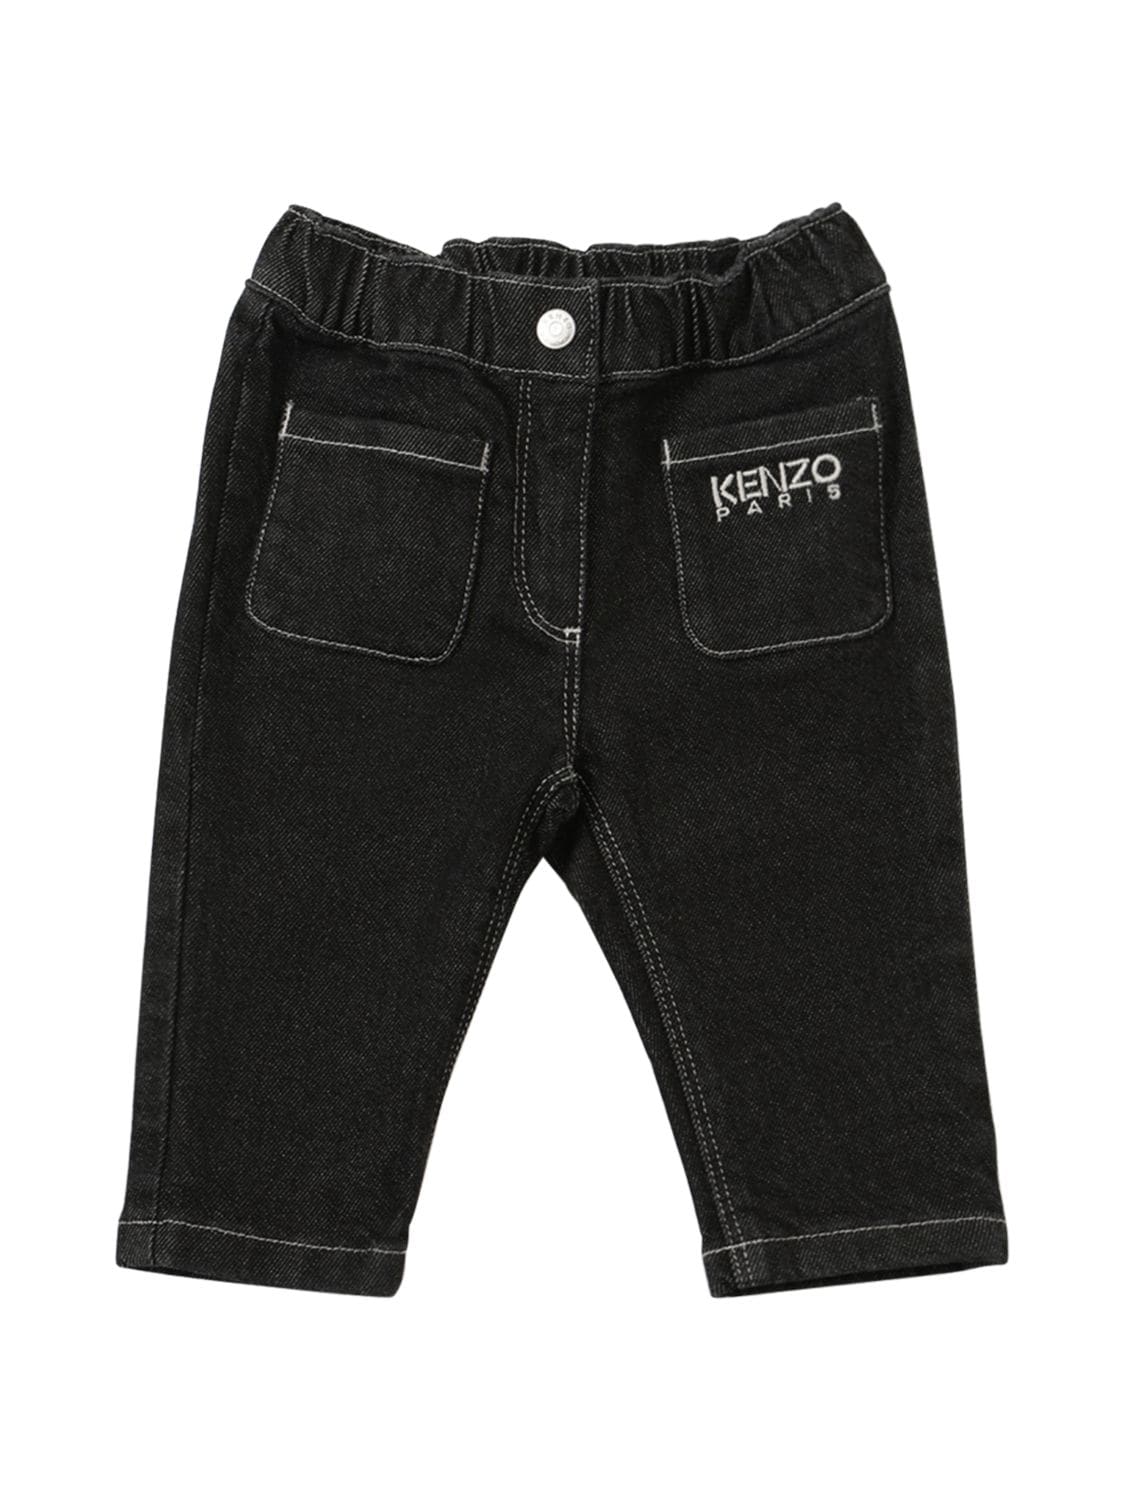 Kenzo Kids' Cotton Denim Jeans W/ Embroidered Logo